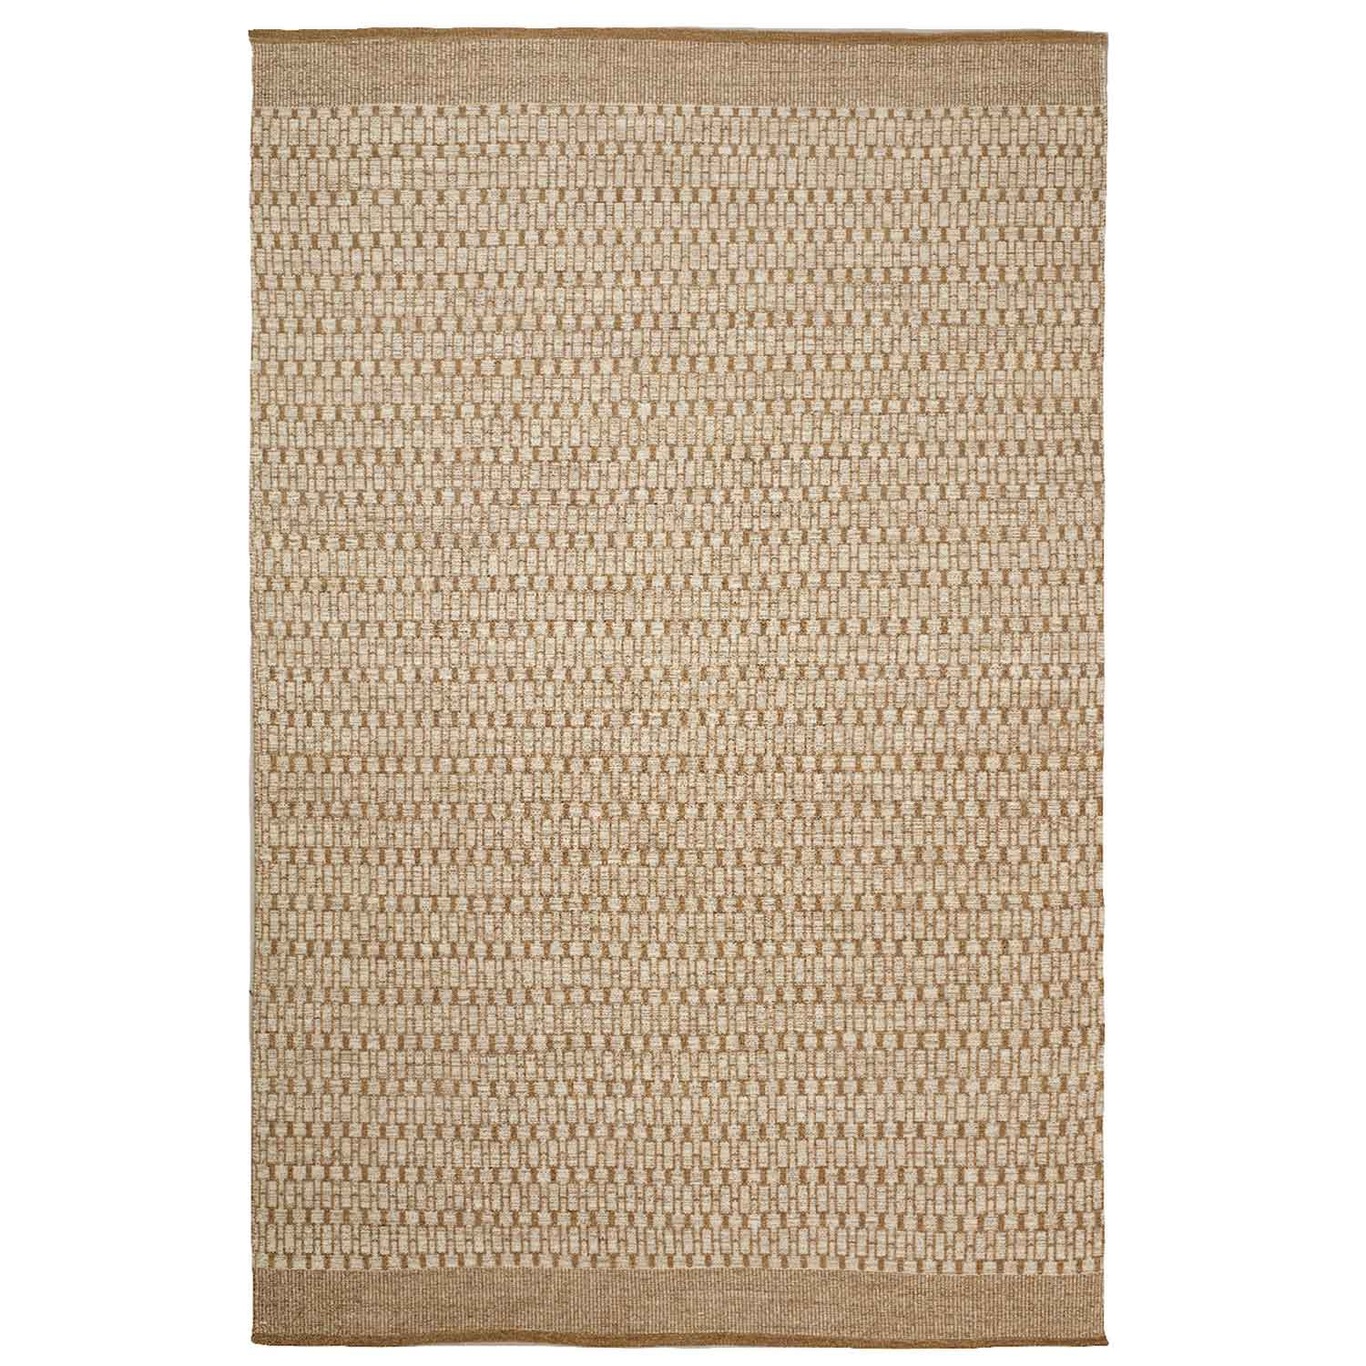 Mahi Dhurry Teppich 200x300 cm, Beige/ Off-White